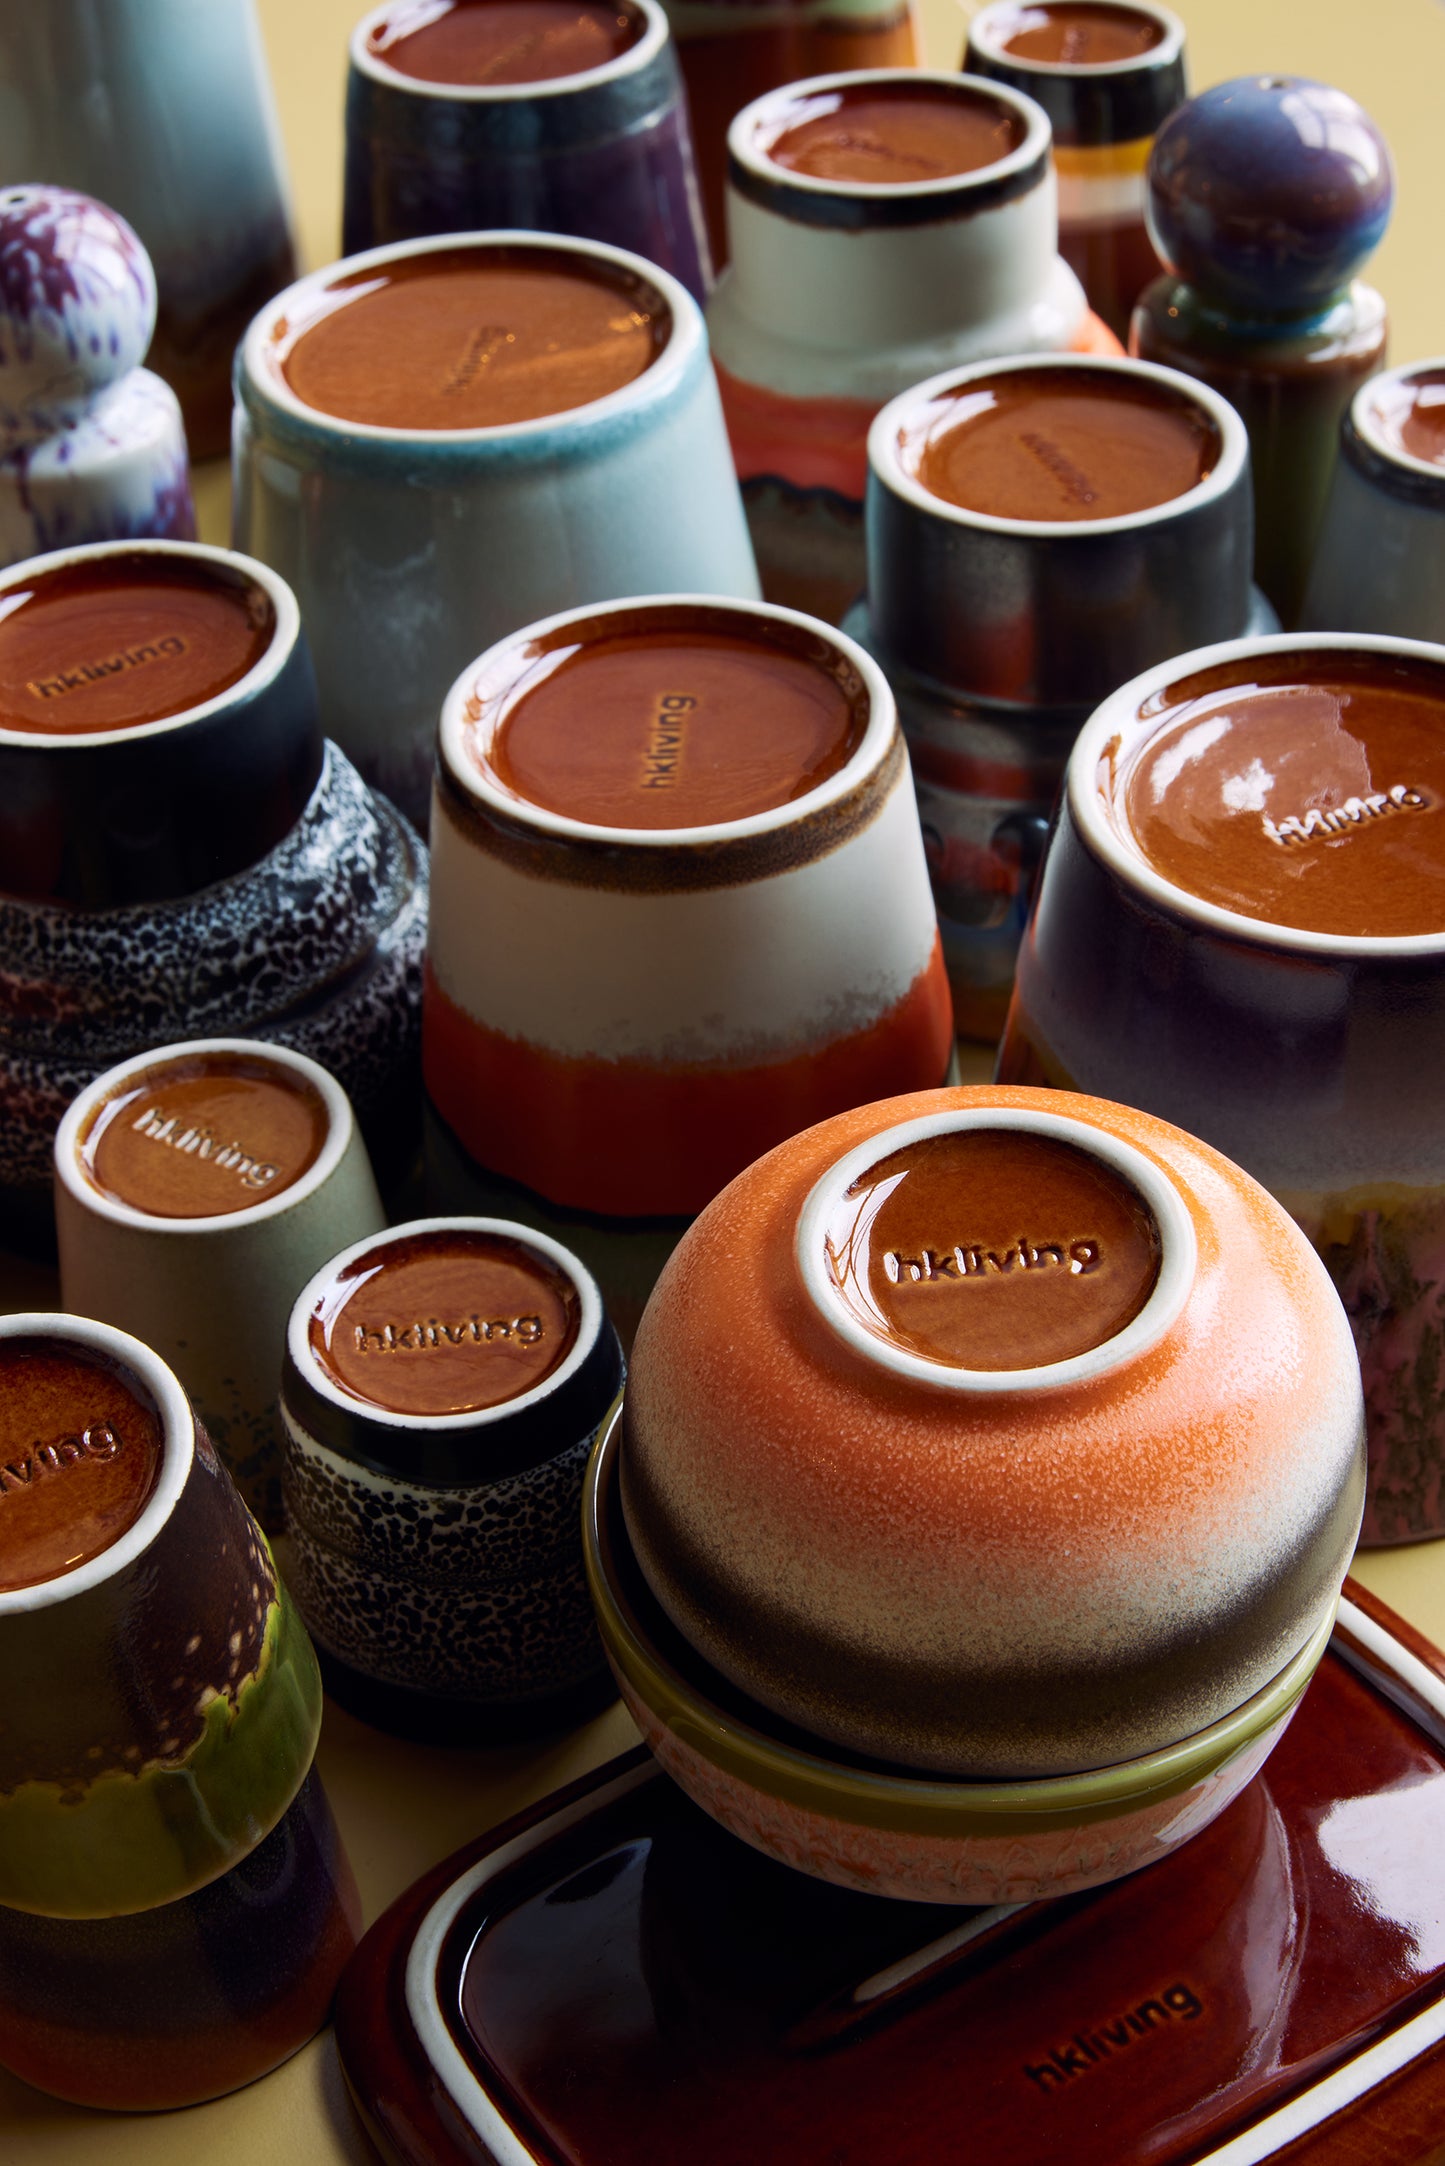 HKliving 70's Ceramics Fern Coffee Mug